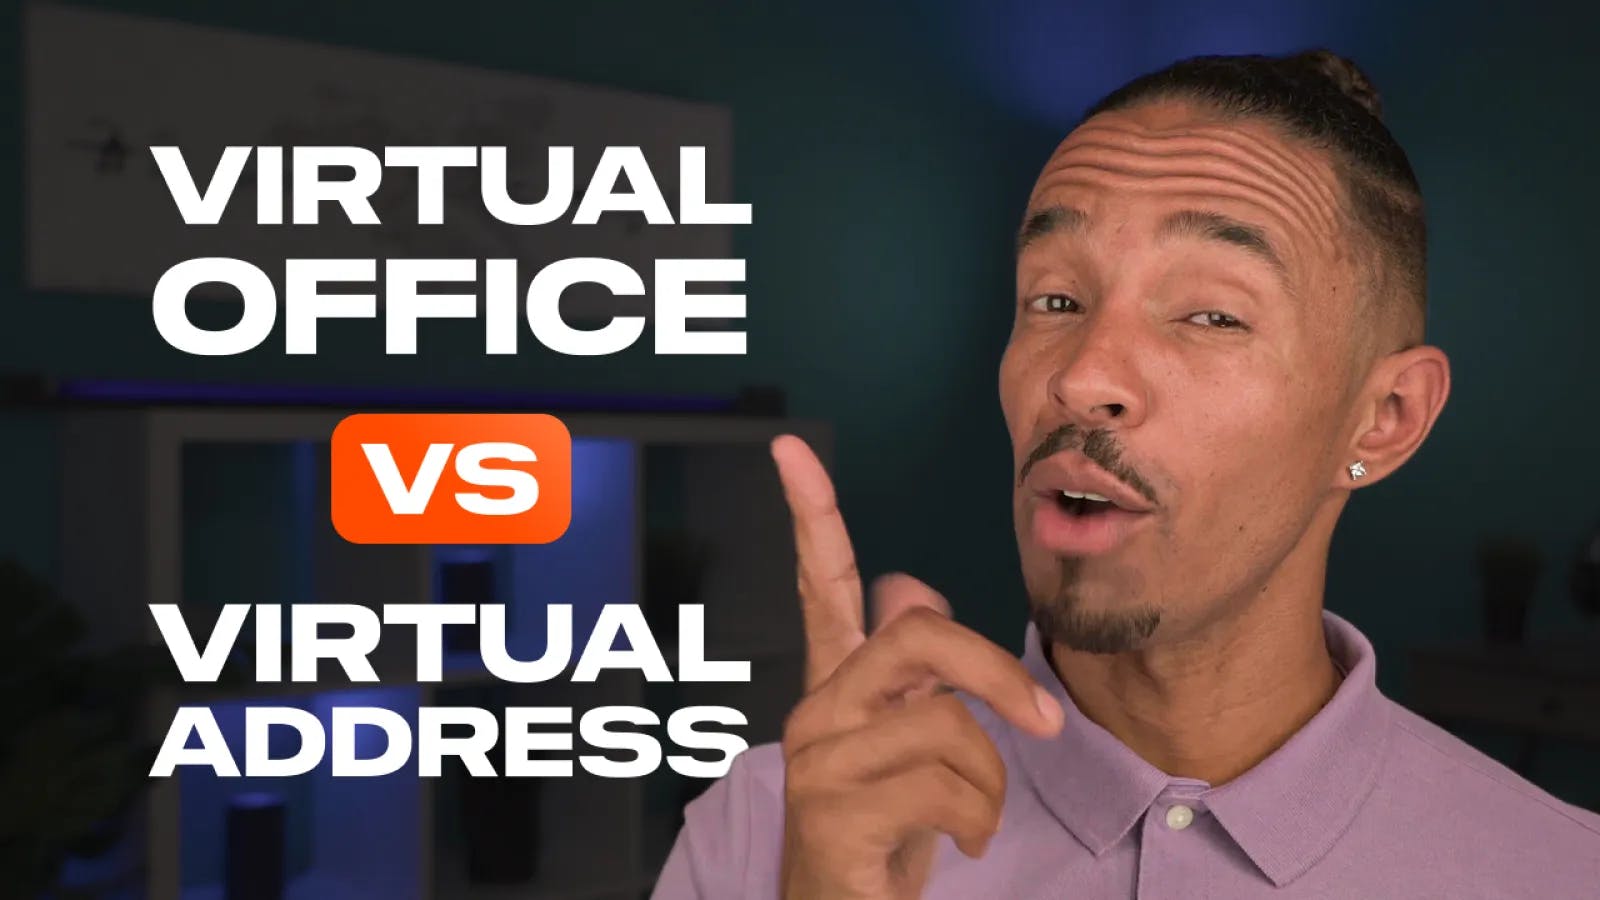 Virtual office vs virtual address video thumbnail